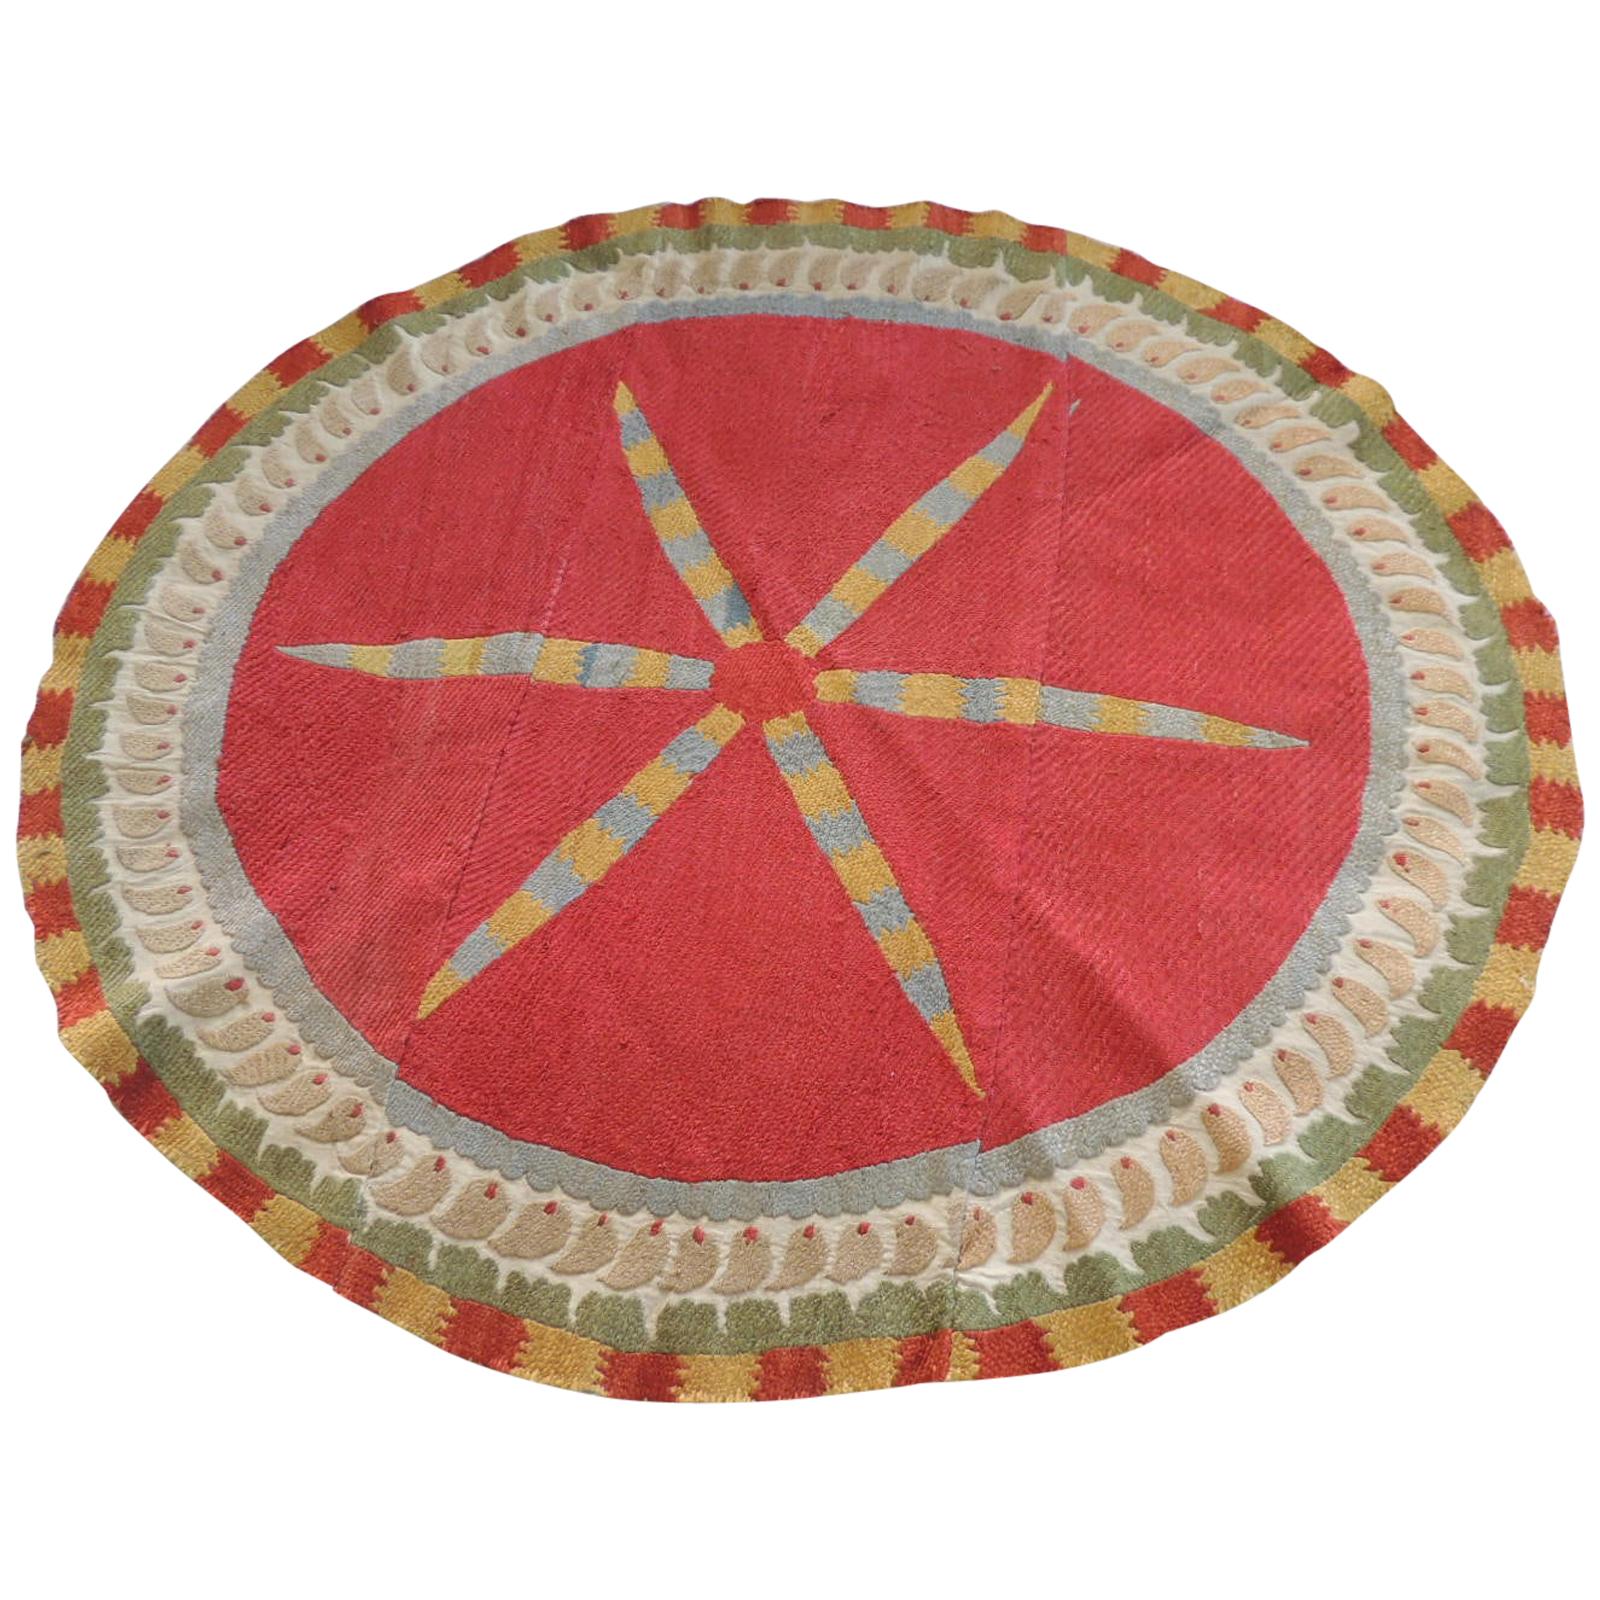 Large Vintage Orange and Yellow Oval Suzani Textile Fragment